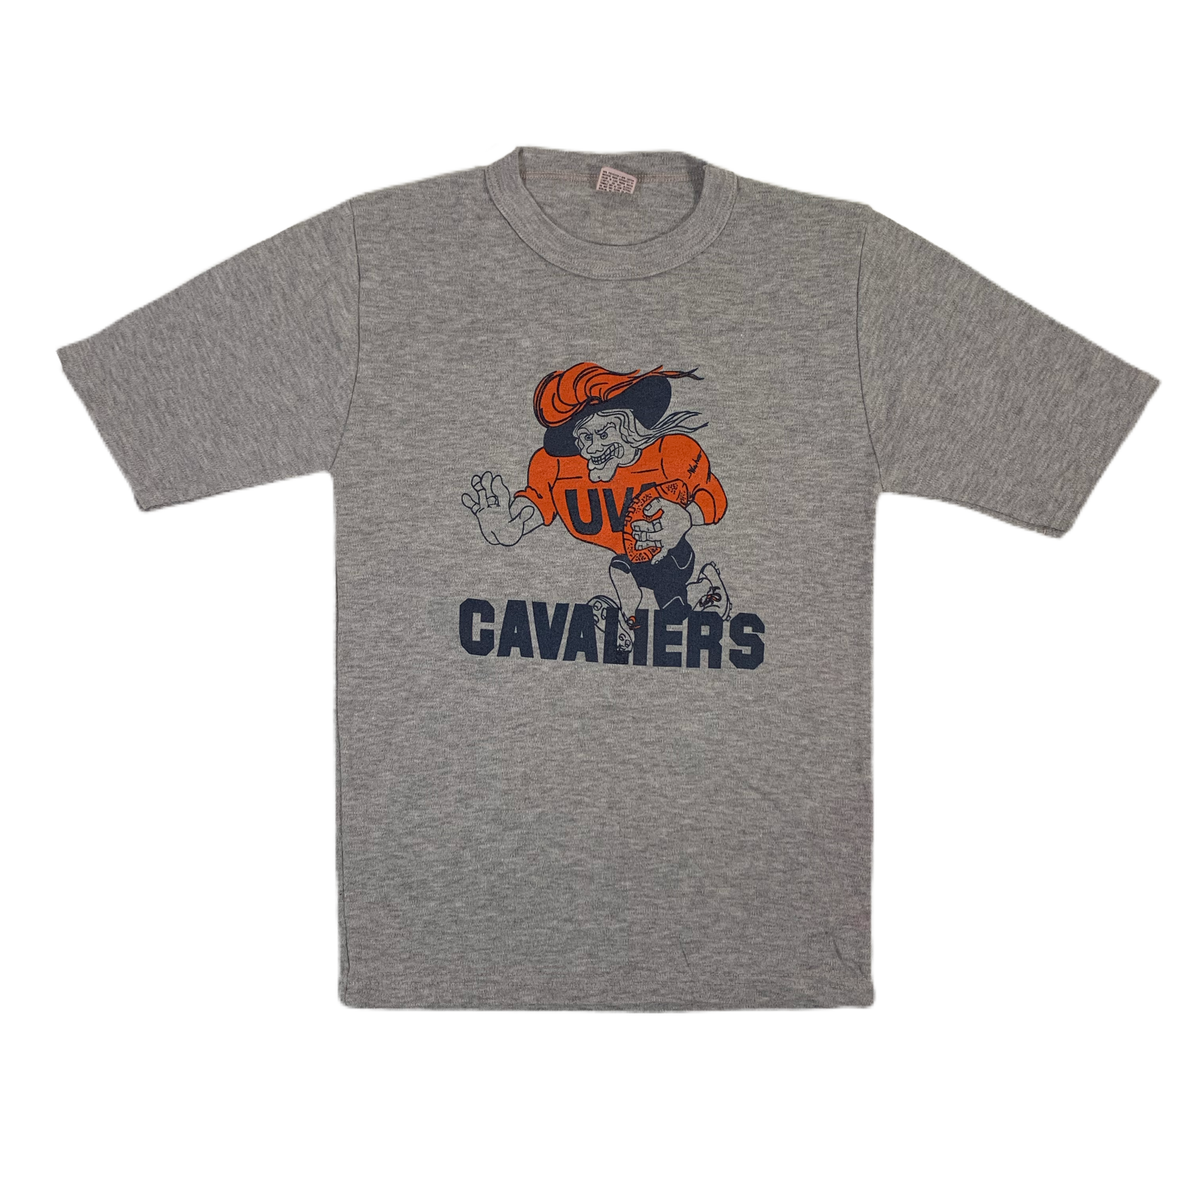 Vintage University Of Virginia “Cavaliers” T-Shirt - jointcustodydc